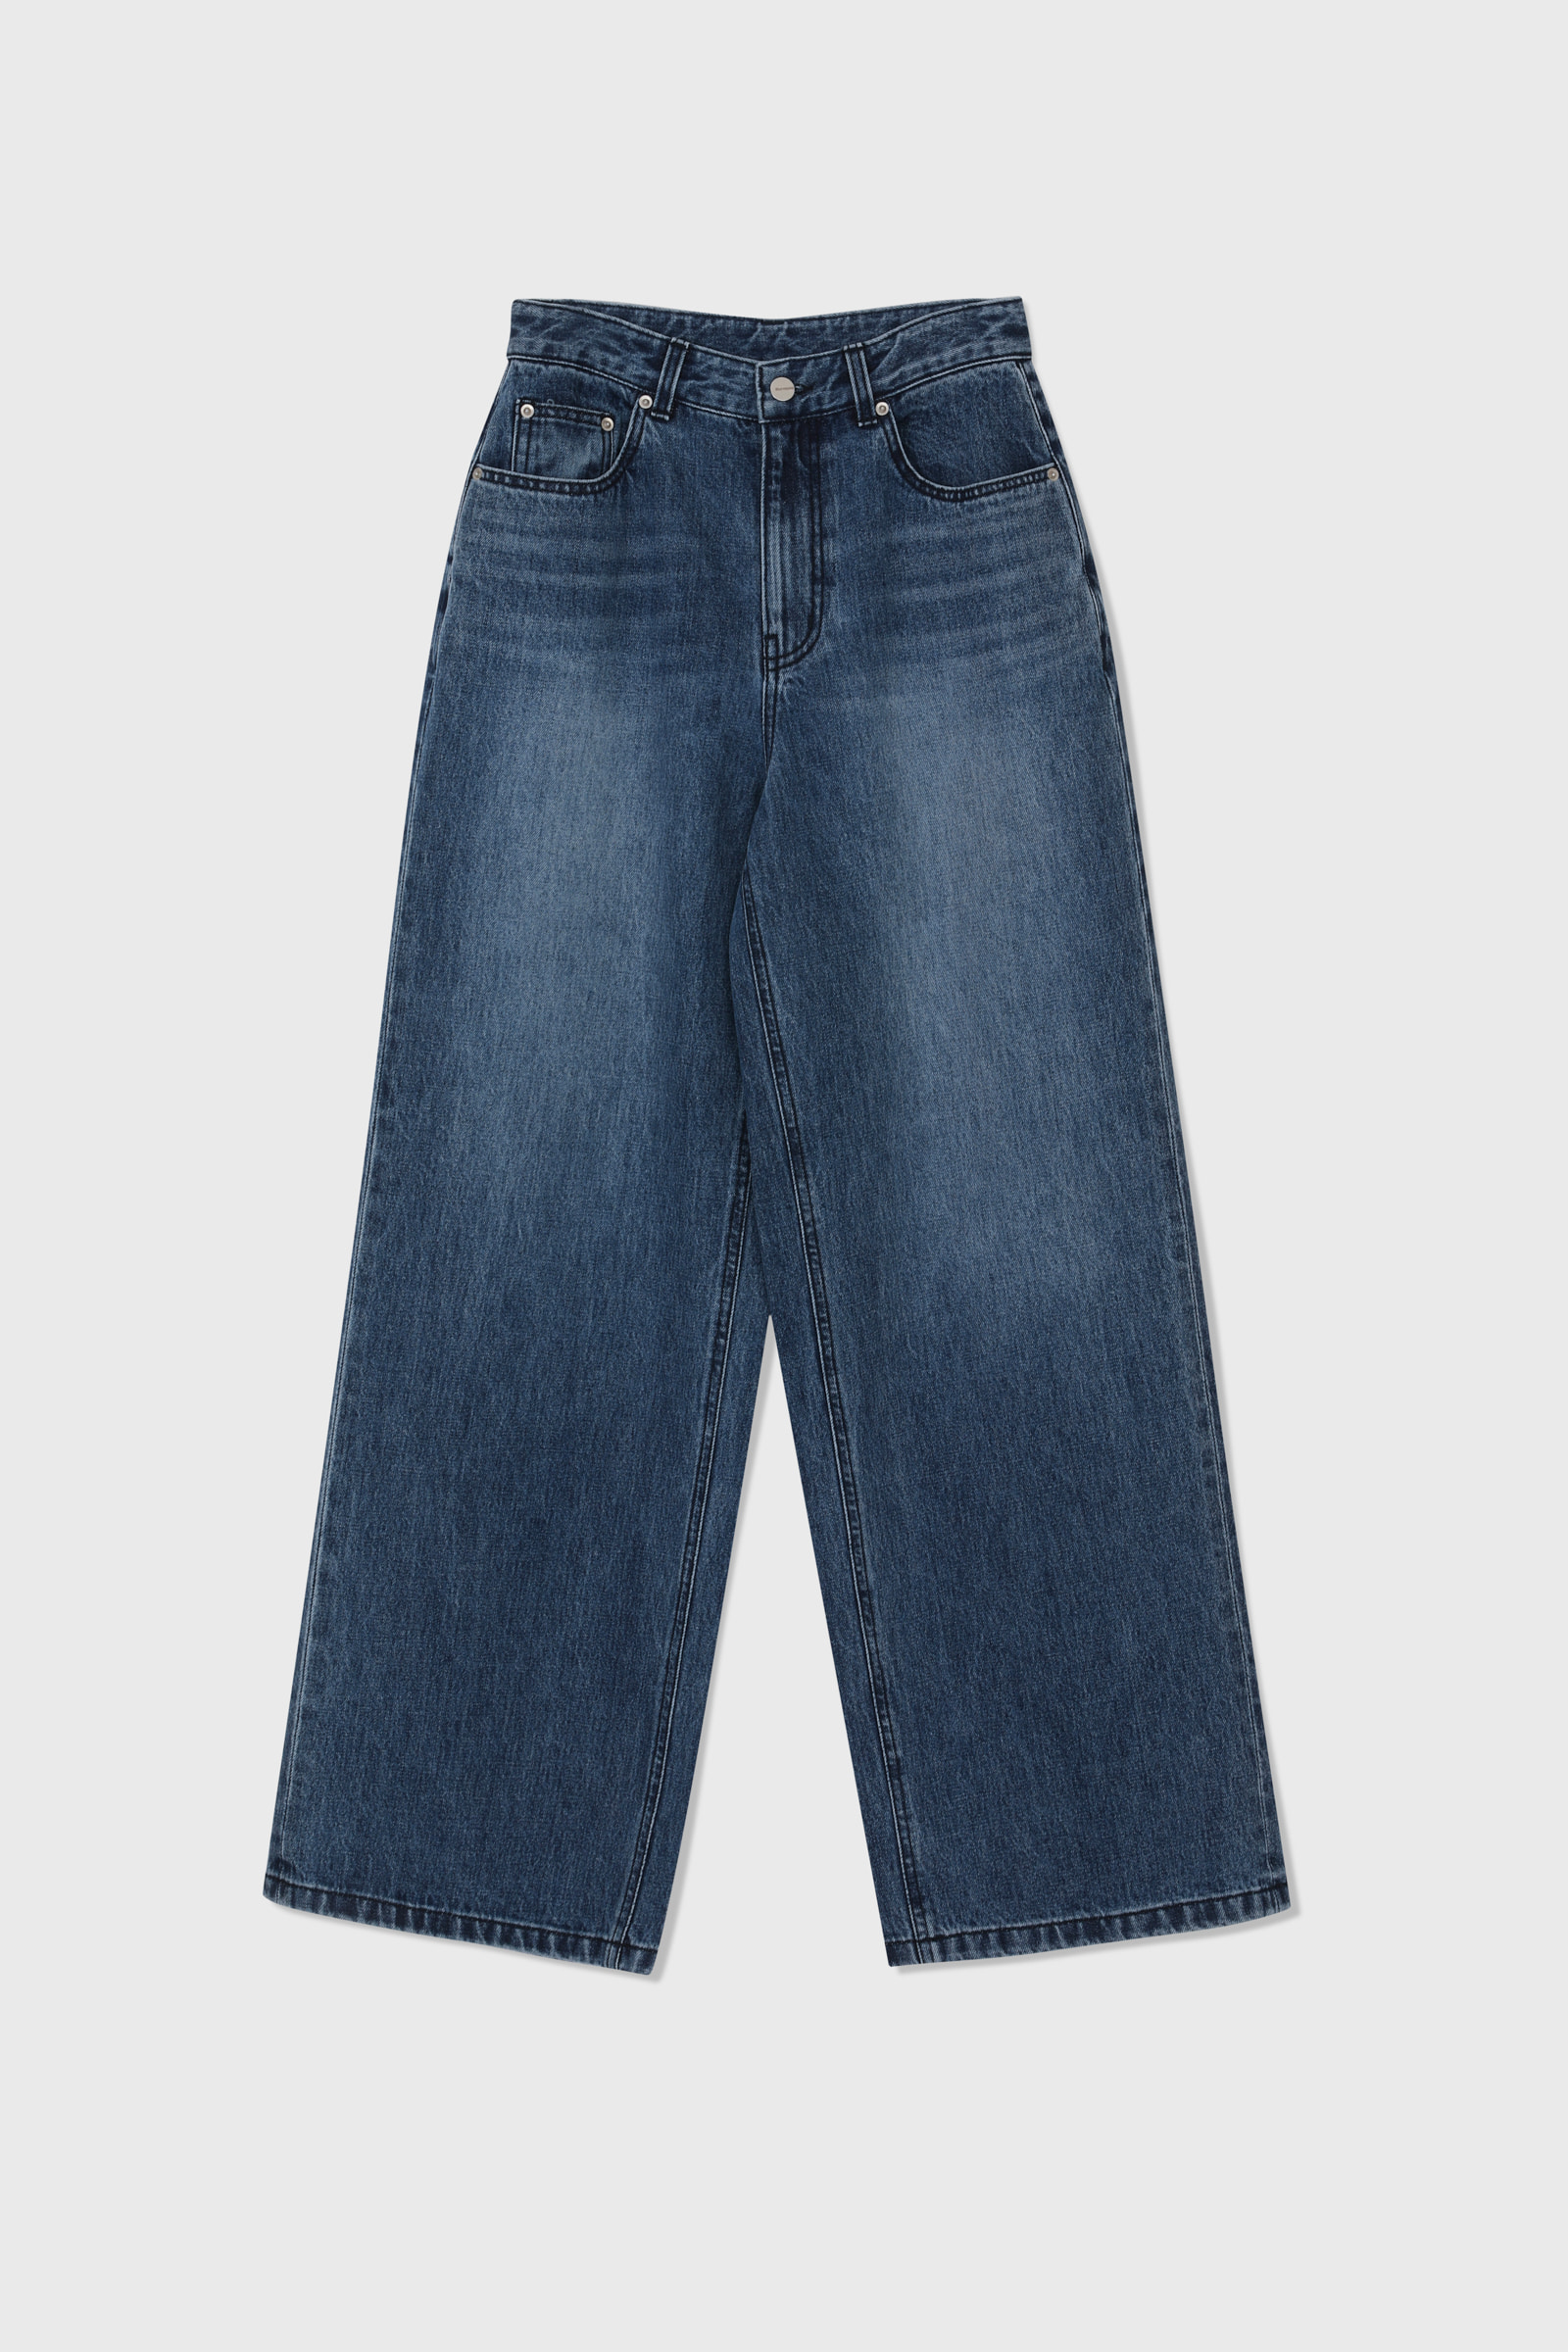 Low Rise Washing Wide Jeans CS14 - Lewkin